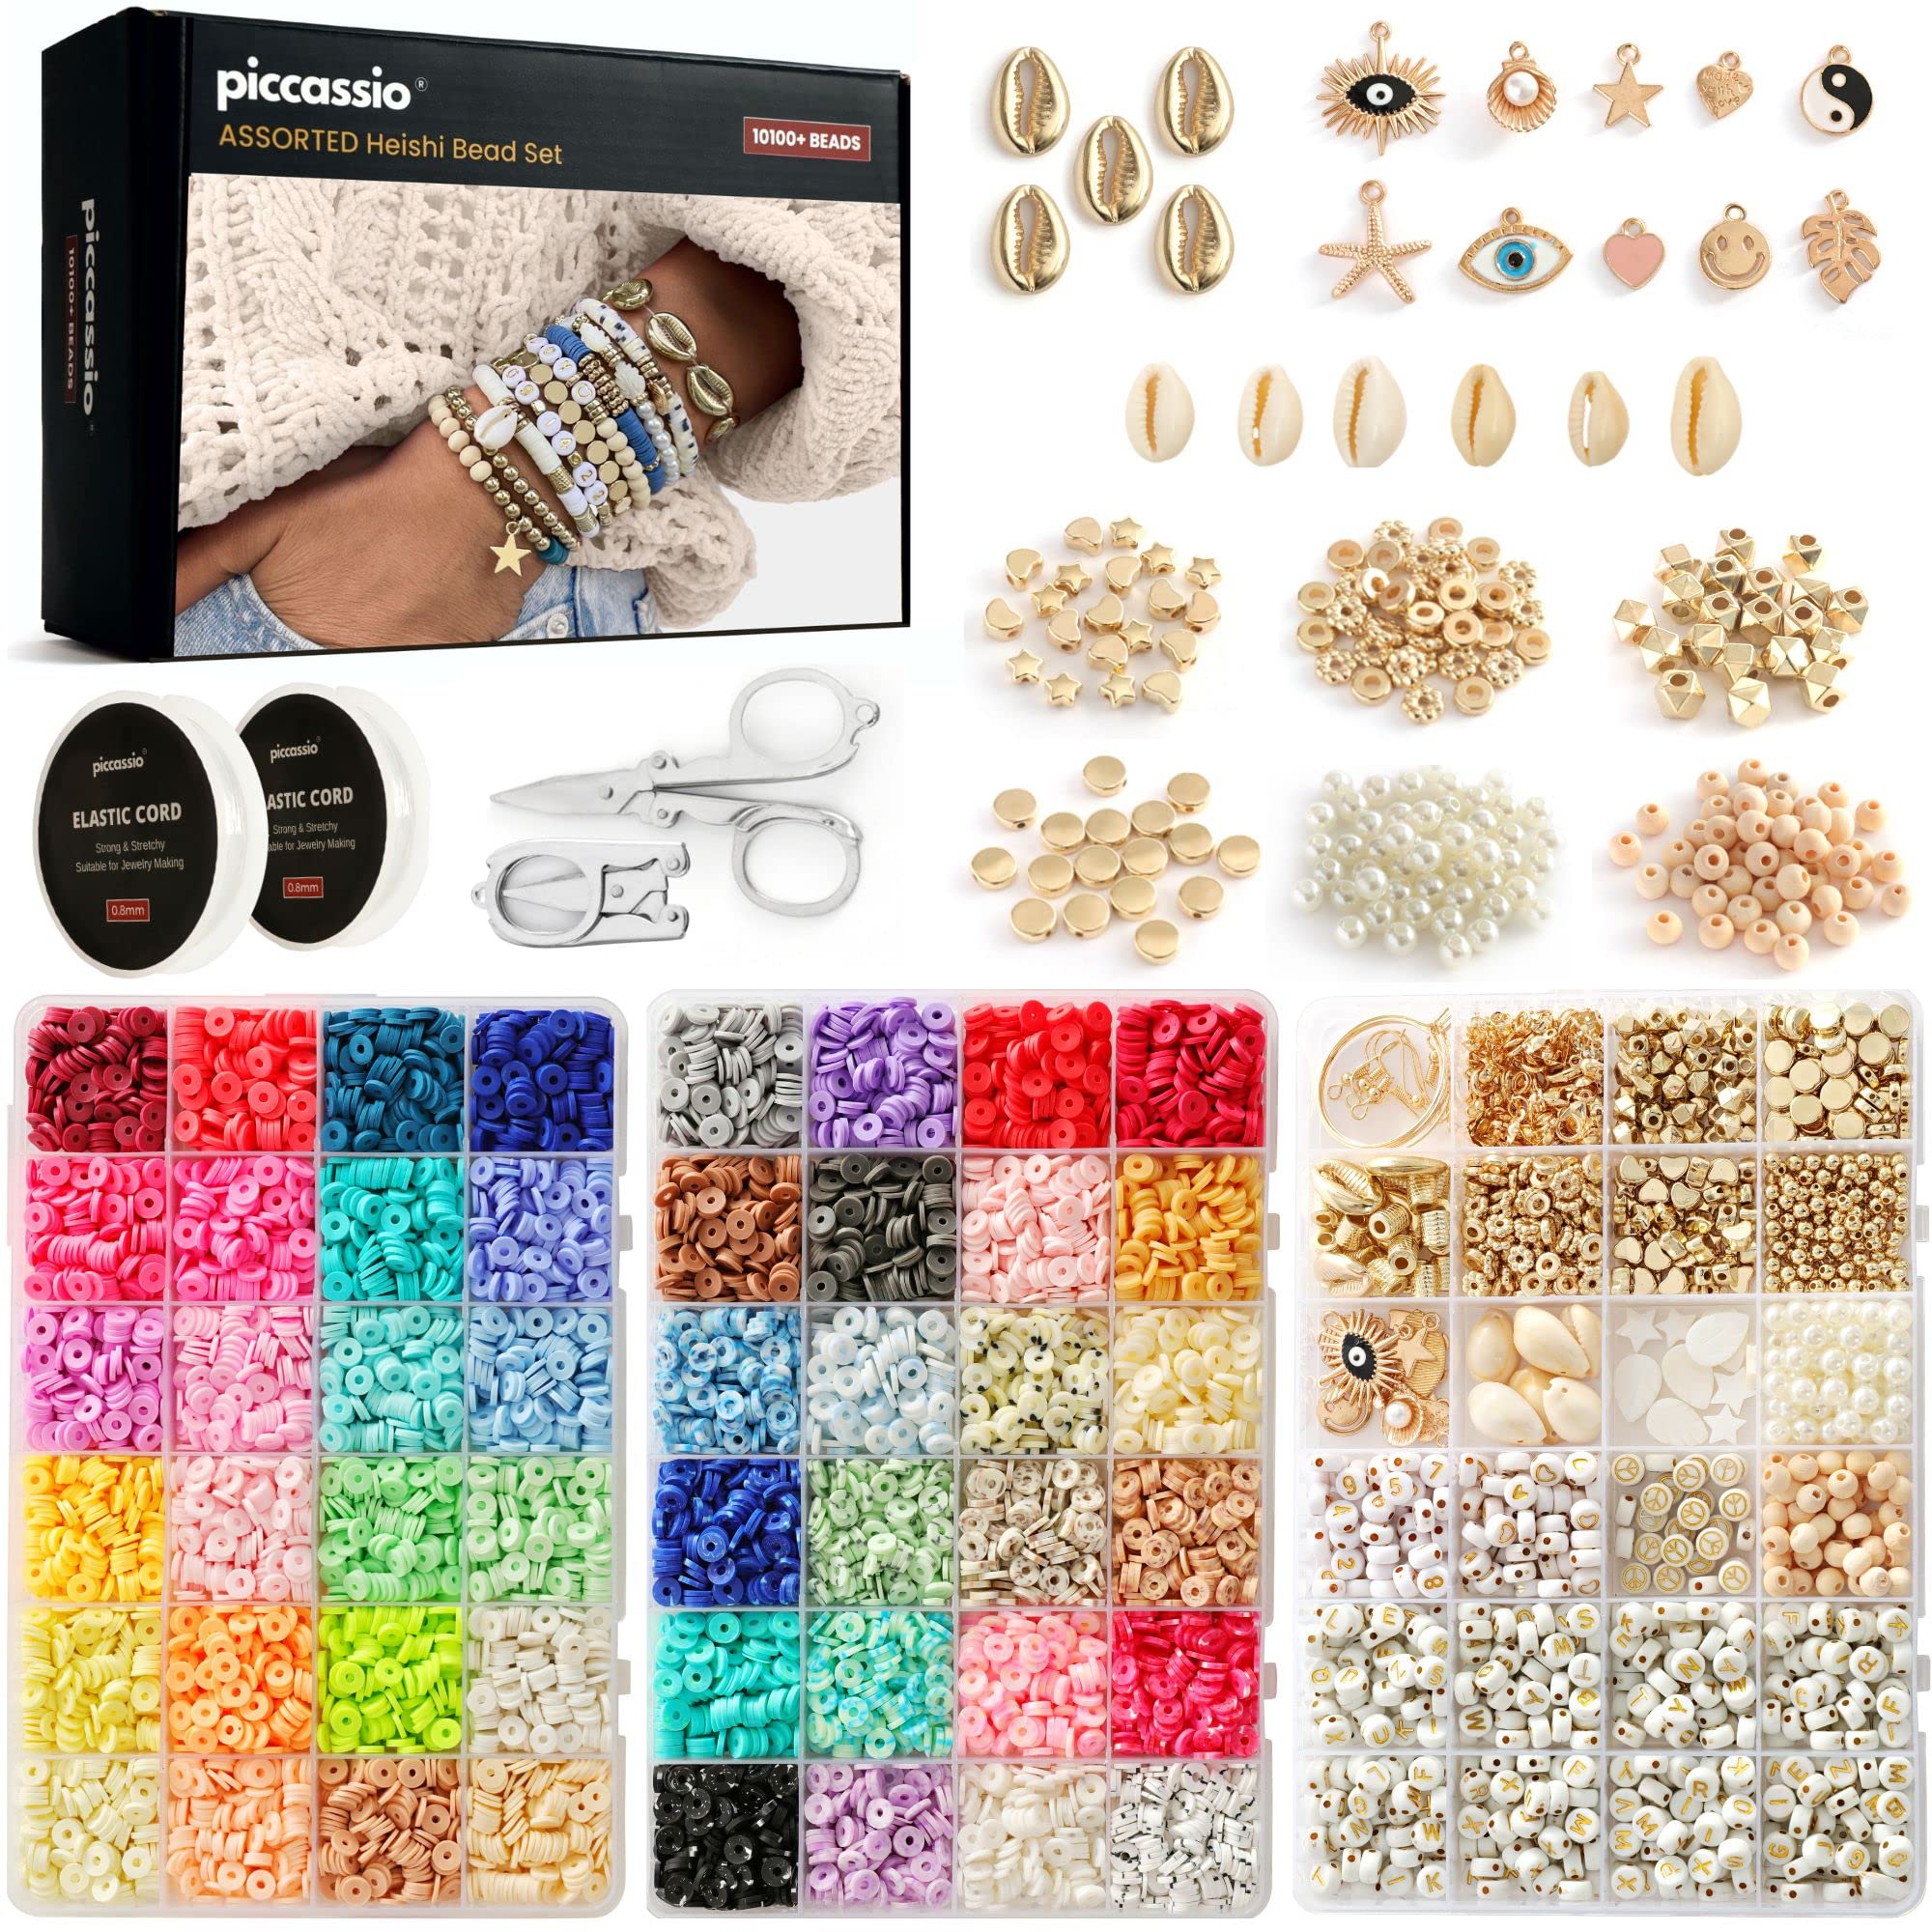 Clay Beads Bracelet Making Kit for Girls, DIY India